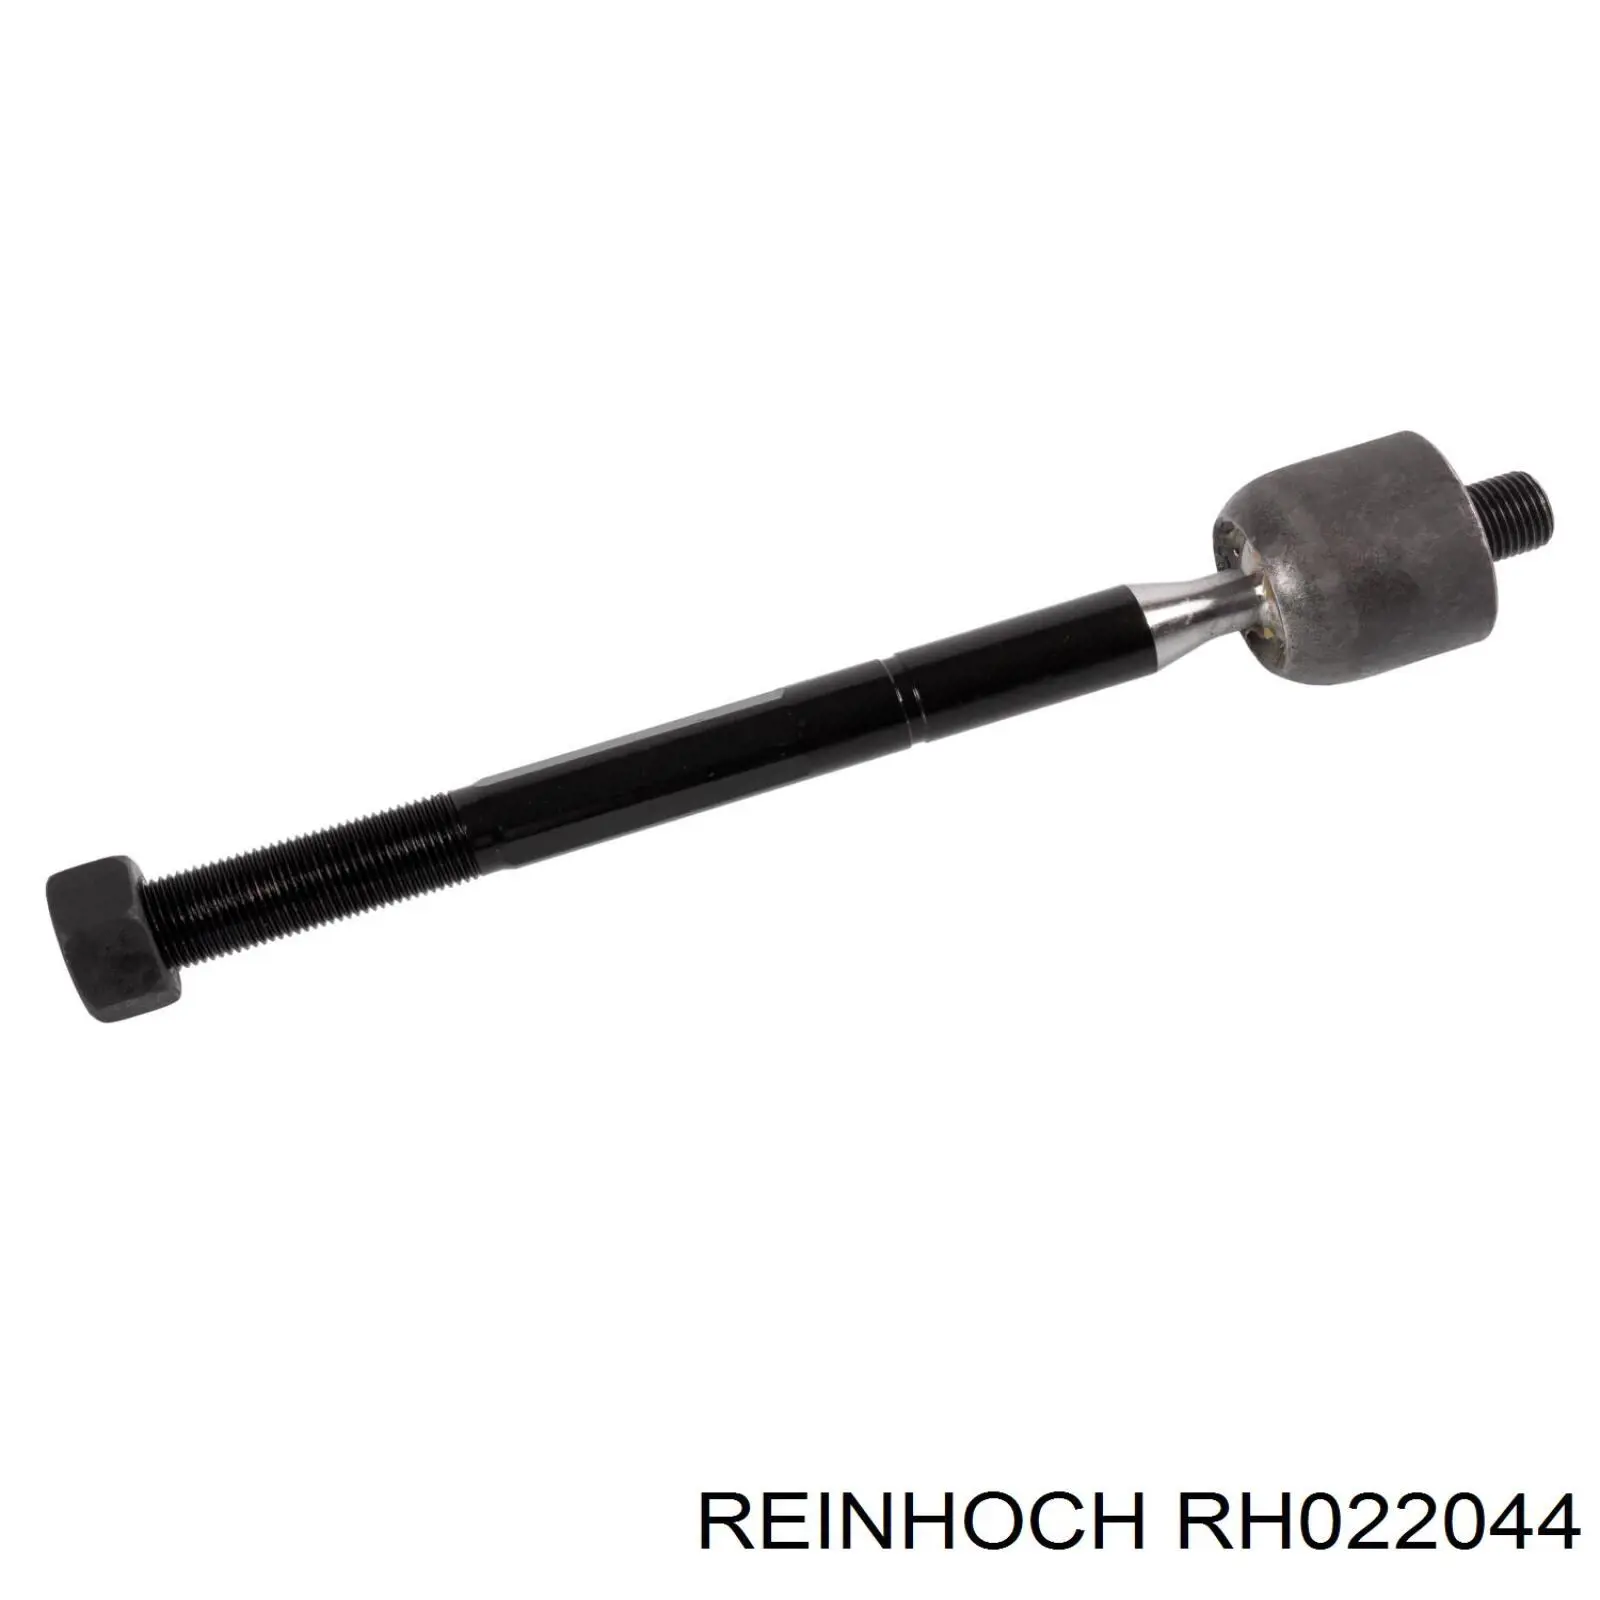 RH022044 Reinhoch barra de acoplamiento